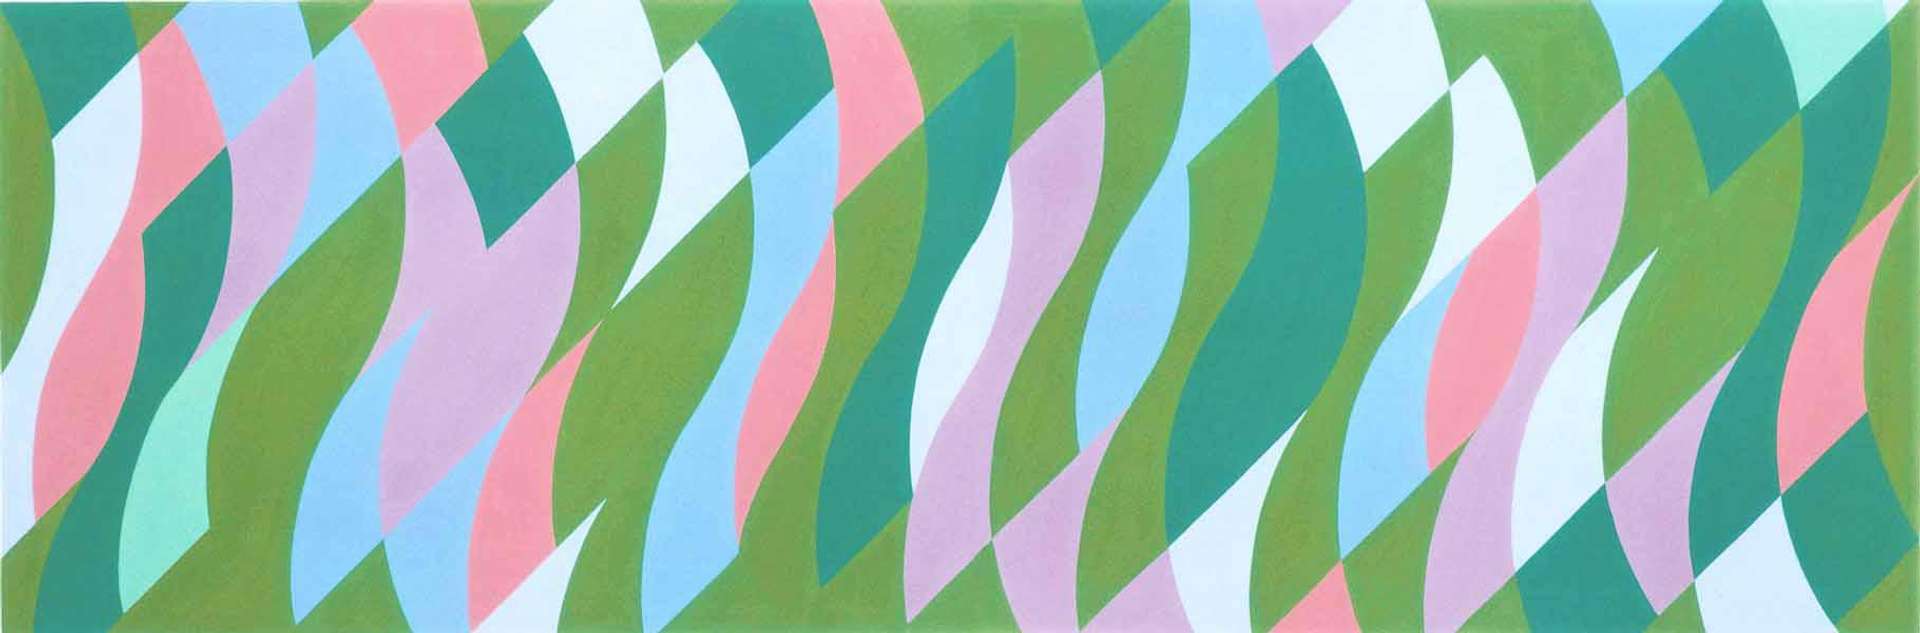 Bridget Riley’s Passing By. An Op Art screenprint of multicoloured geometric patterns. 